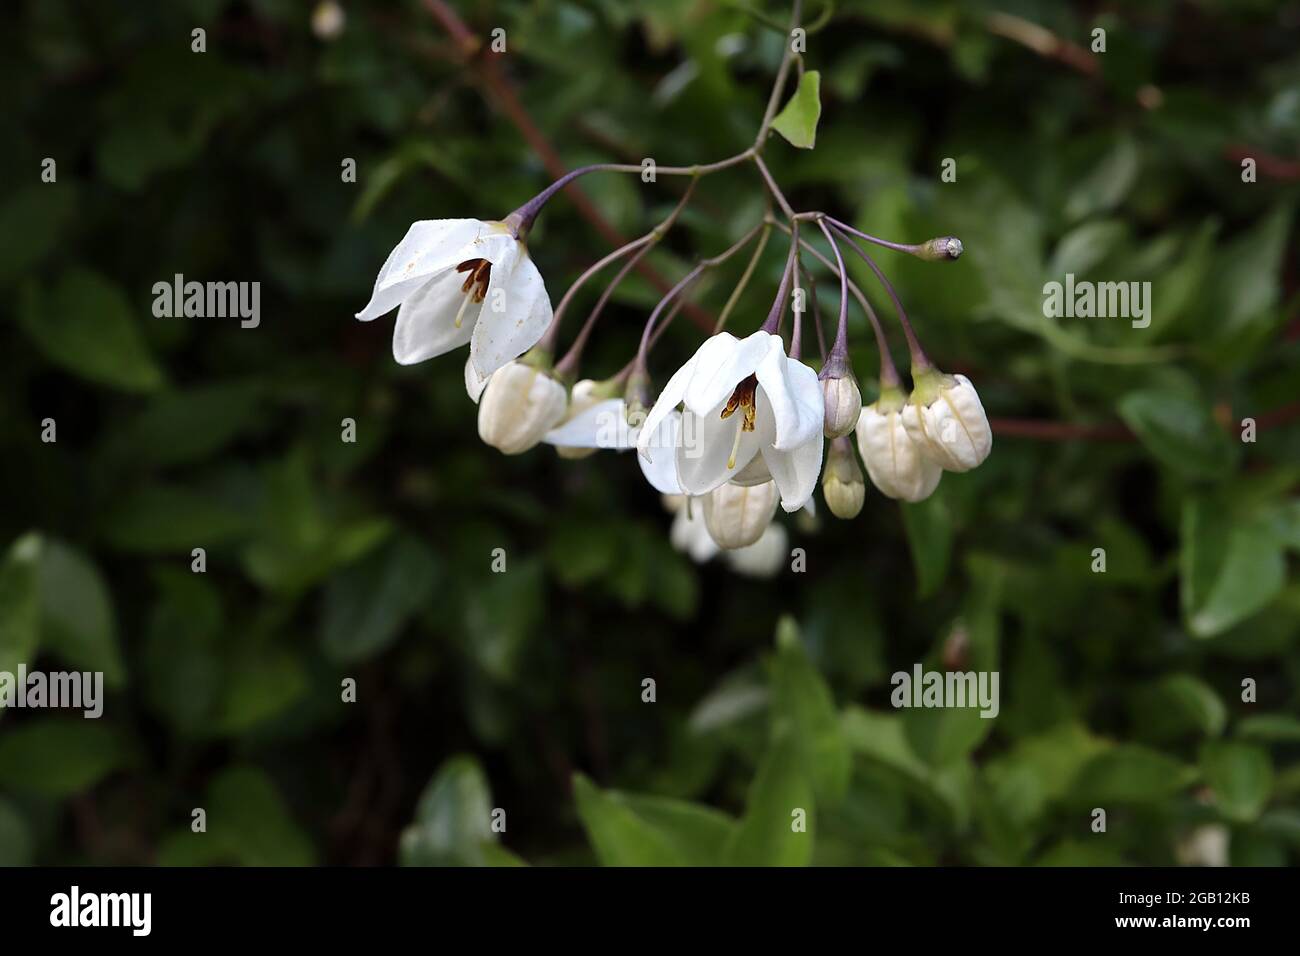 Solanum laxum Album white potato vine - emerging white star-shaped flowers in open clusters, June, England, UK Stock Photo